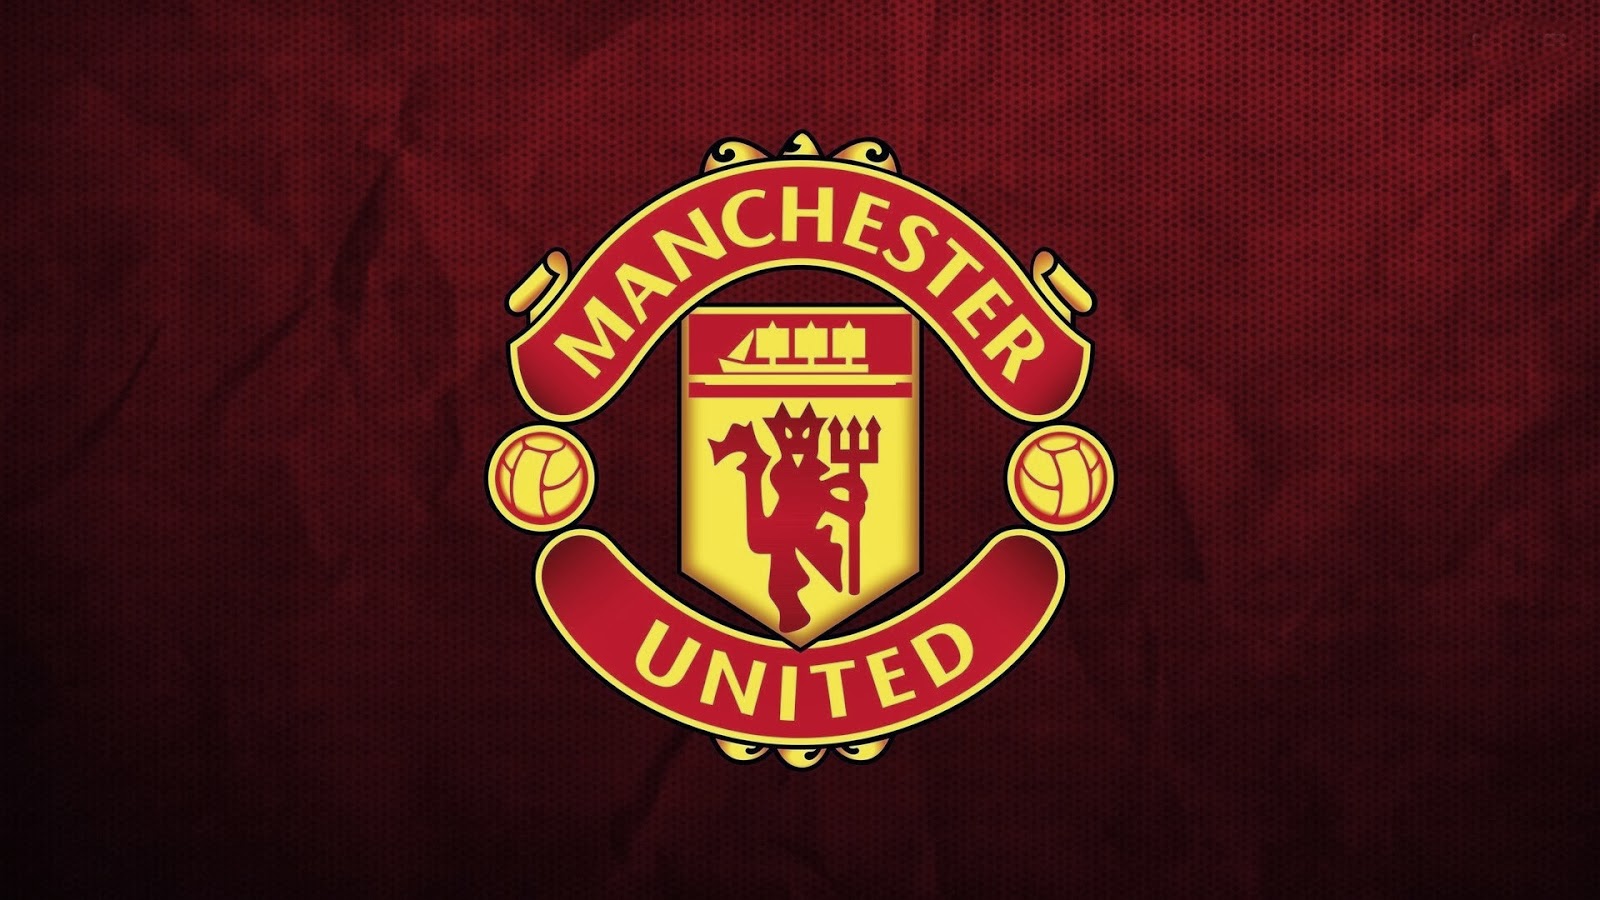 Manchester United Hd Wallpaper 2015 - Manchester United - HD Wallpaper 